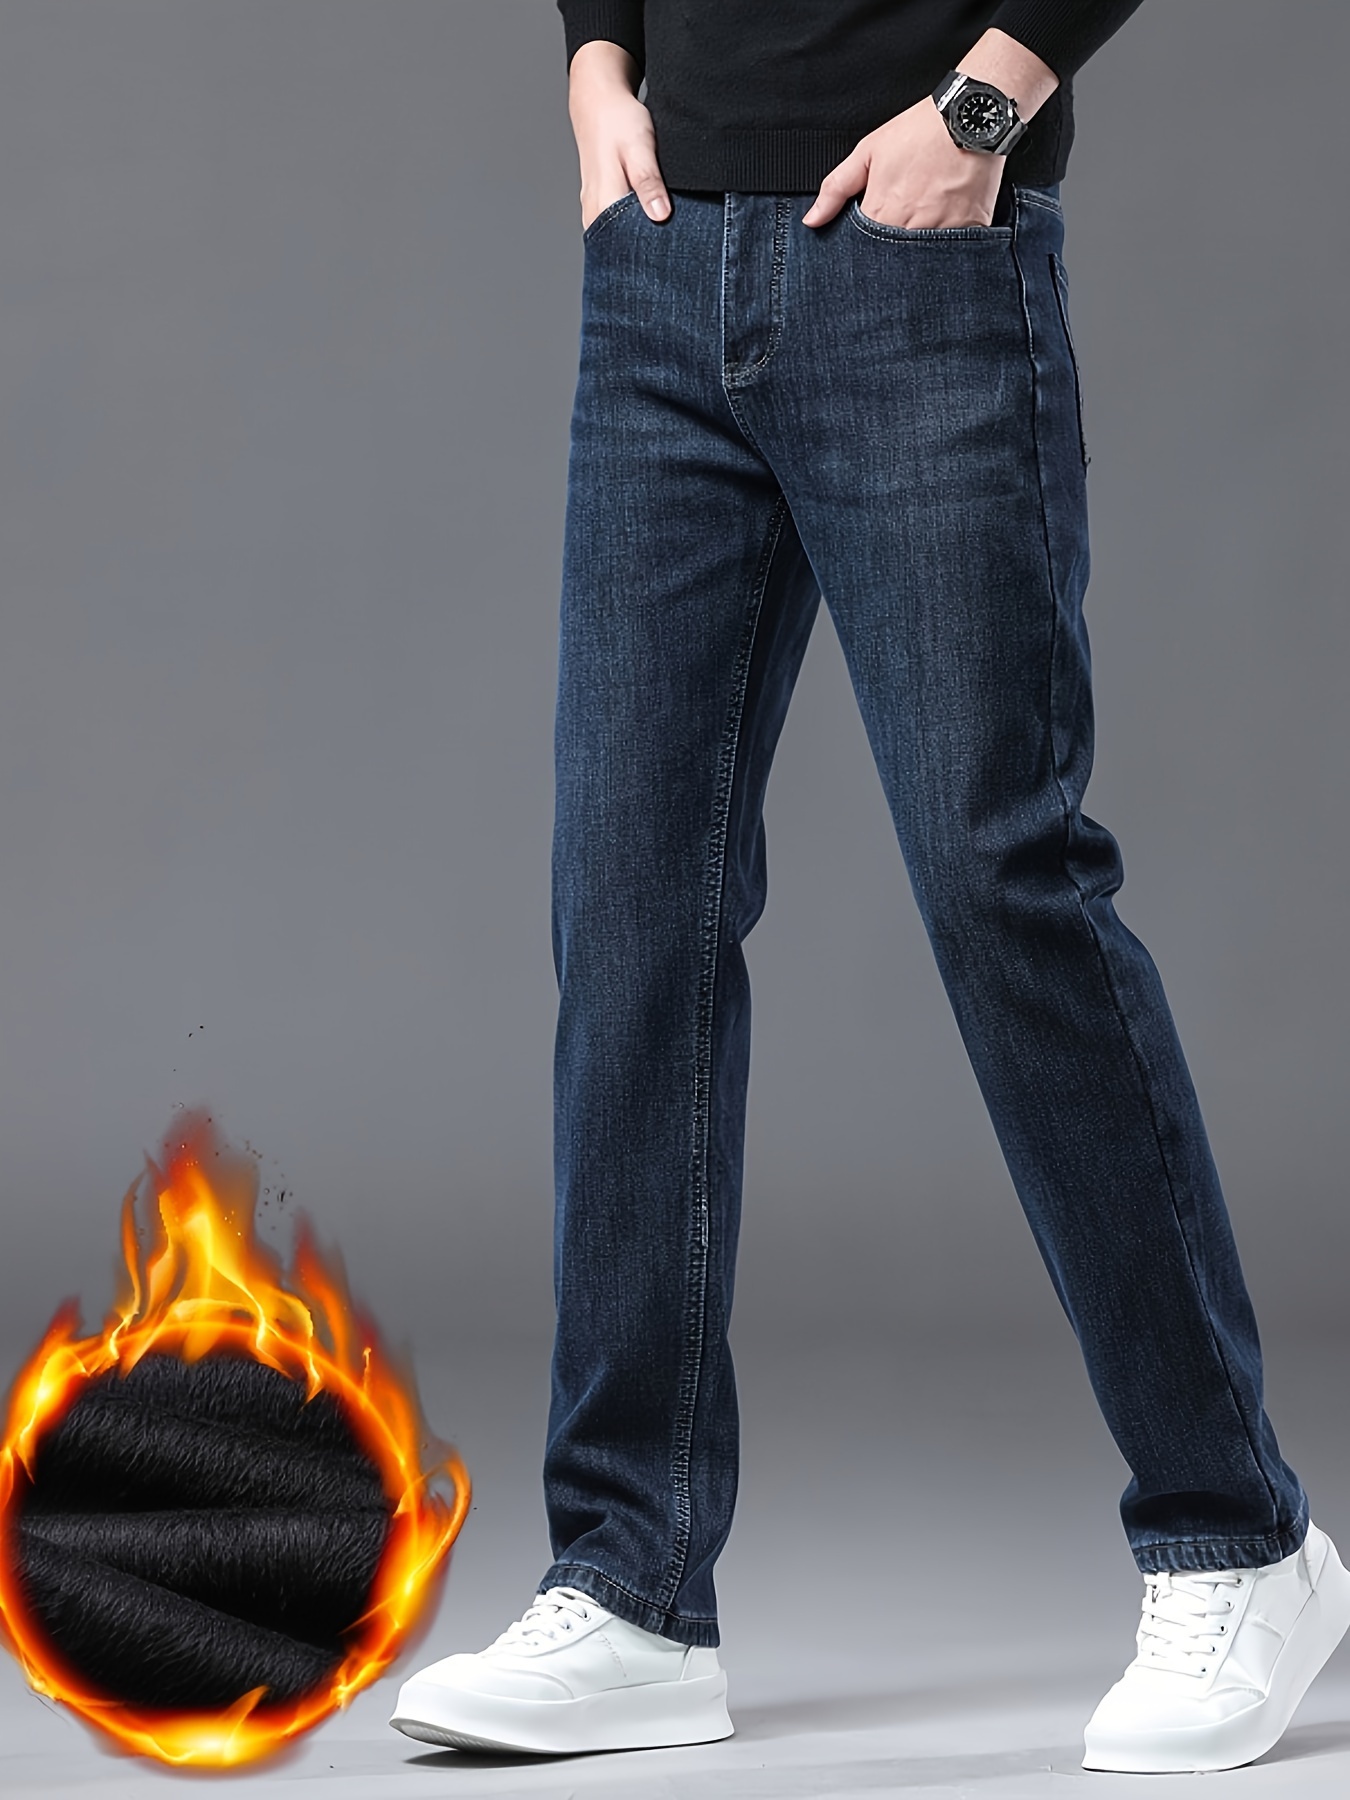 Men's Designer Jeans, Blue, Dark & Black Denim Pants